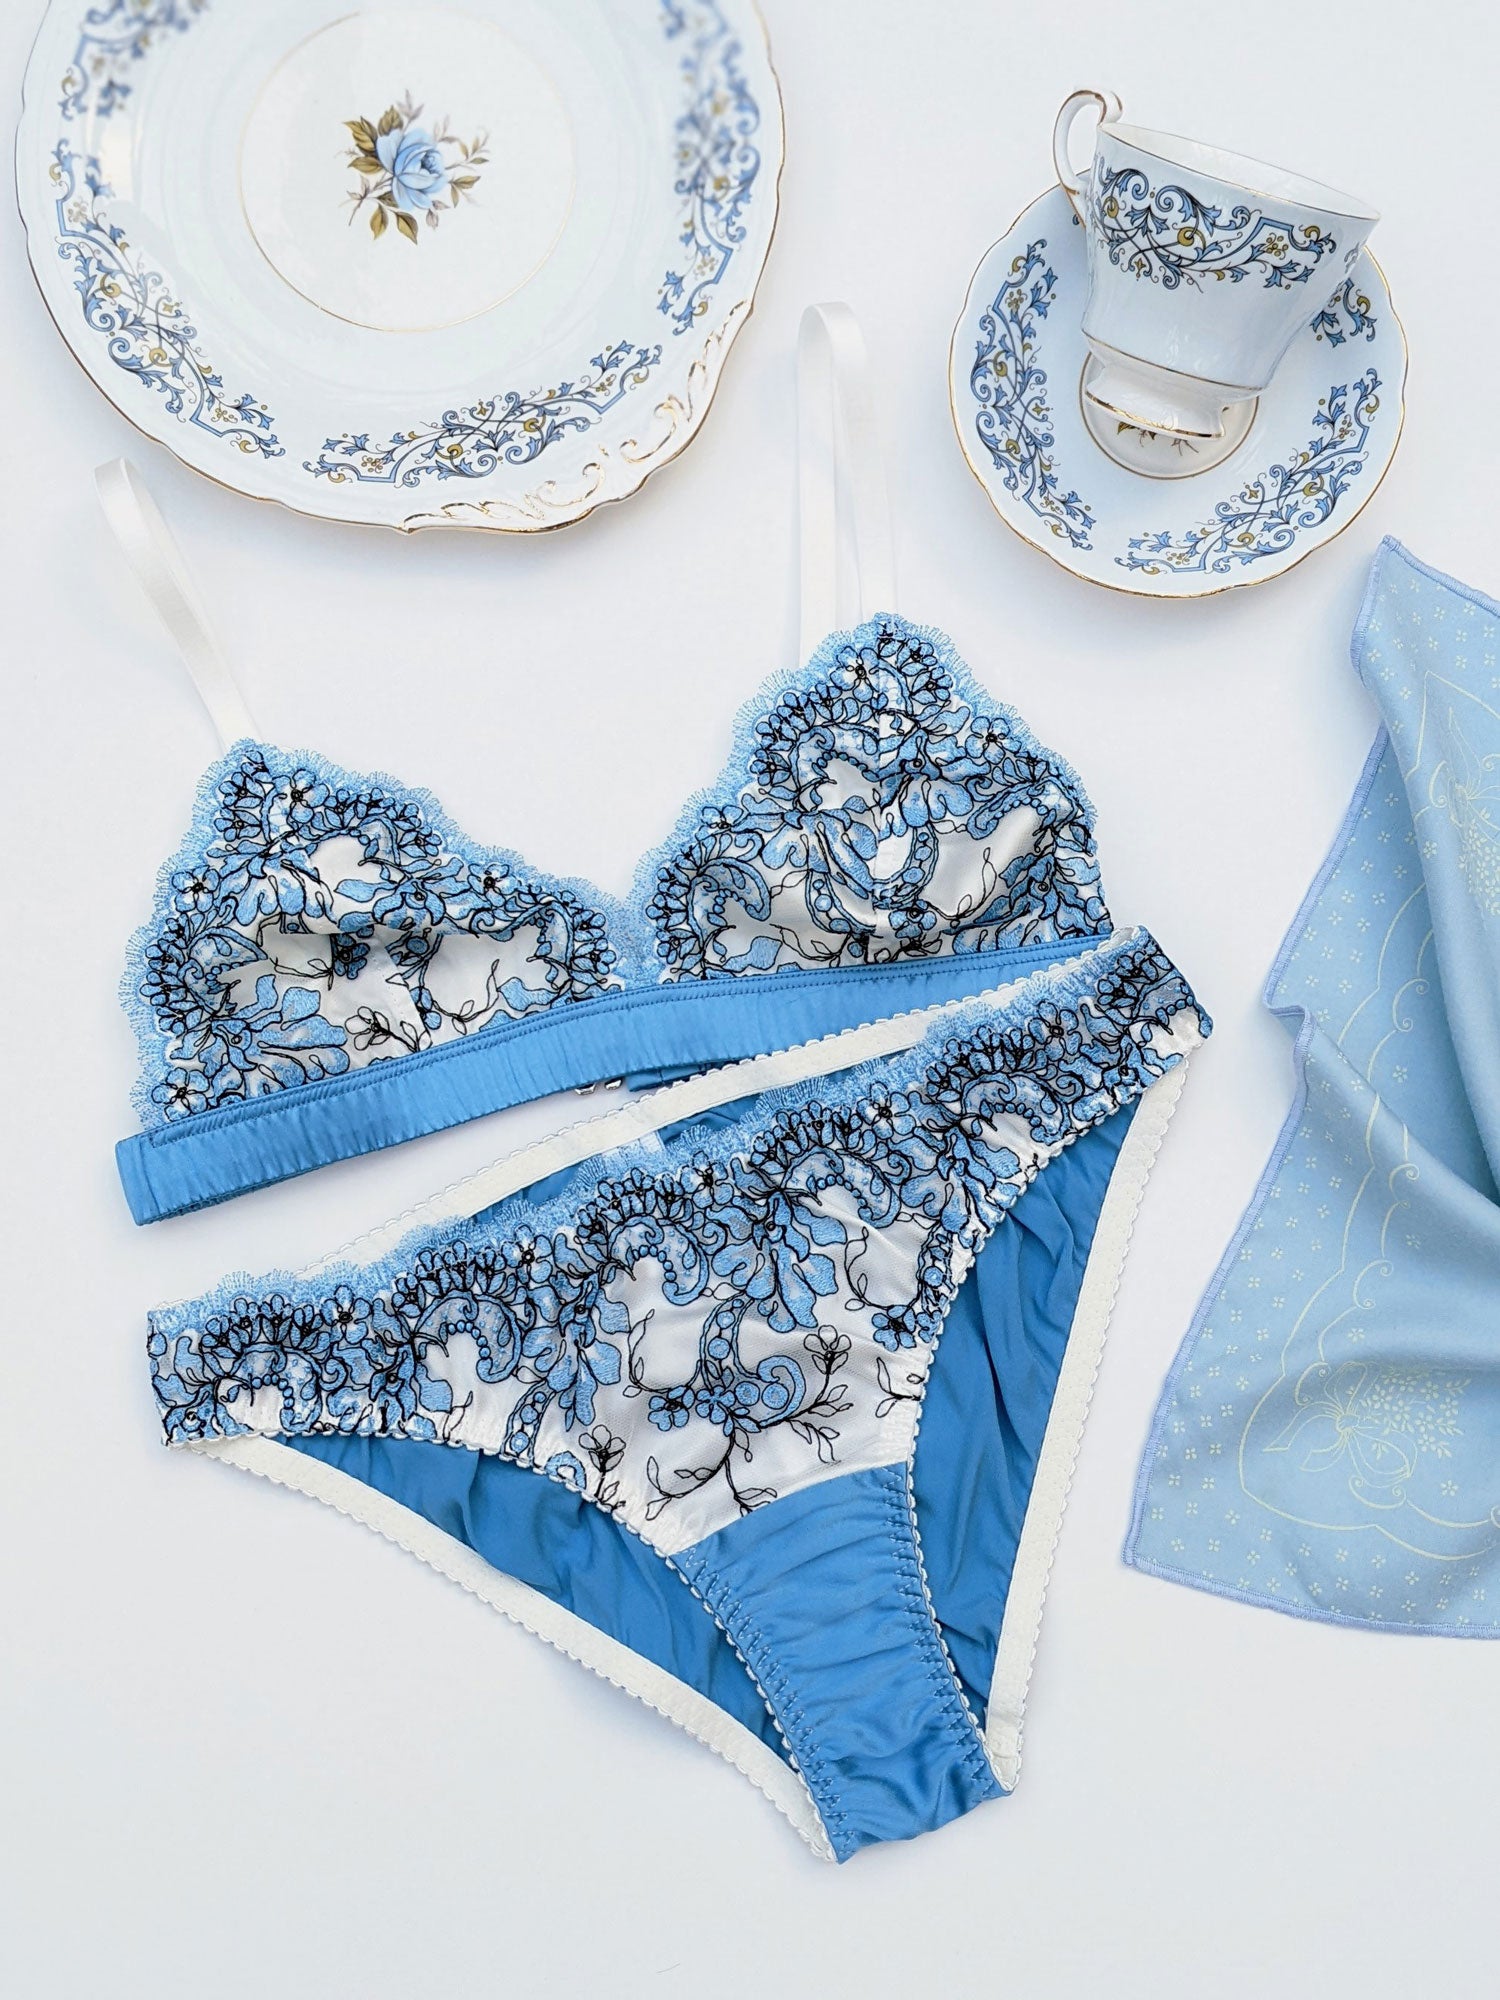 Porcelain inspired lingerie set with a blue china tea set